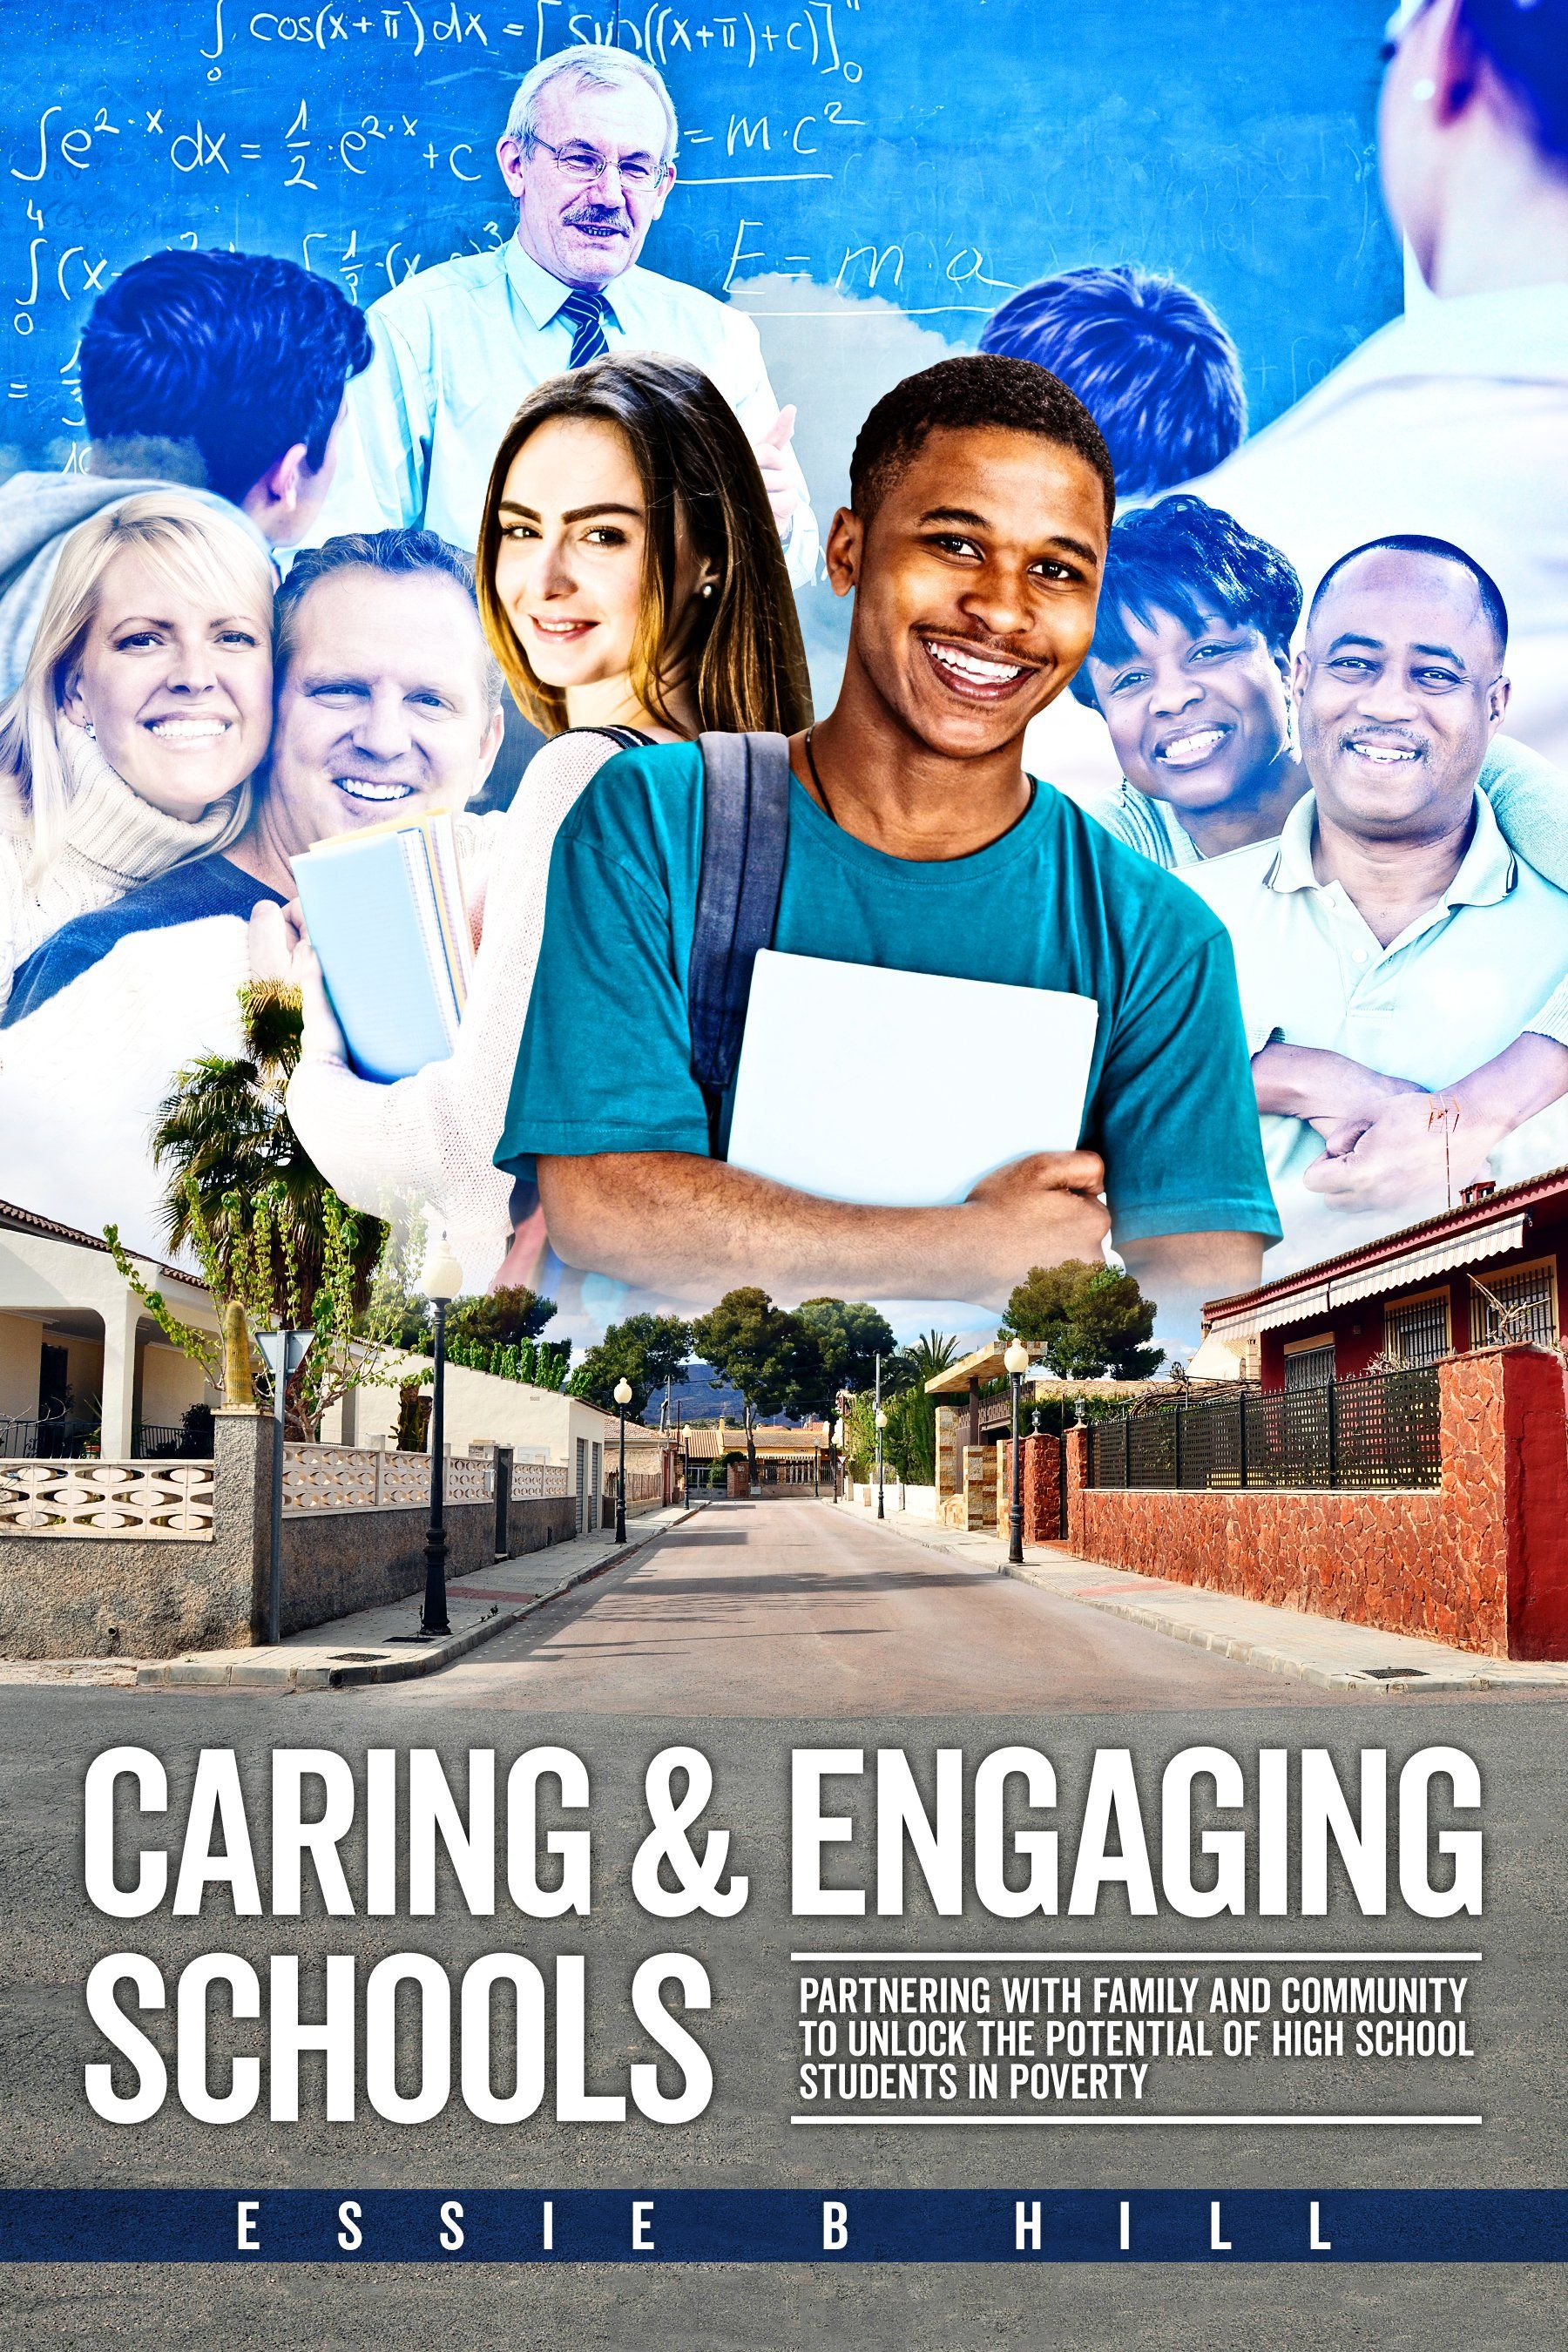 Caring & Engaging Schools, book